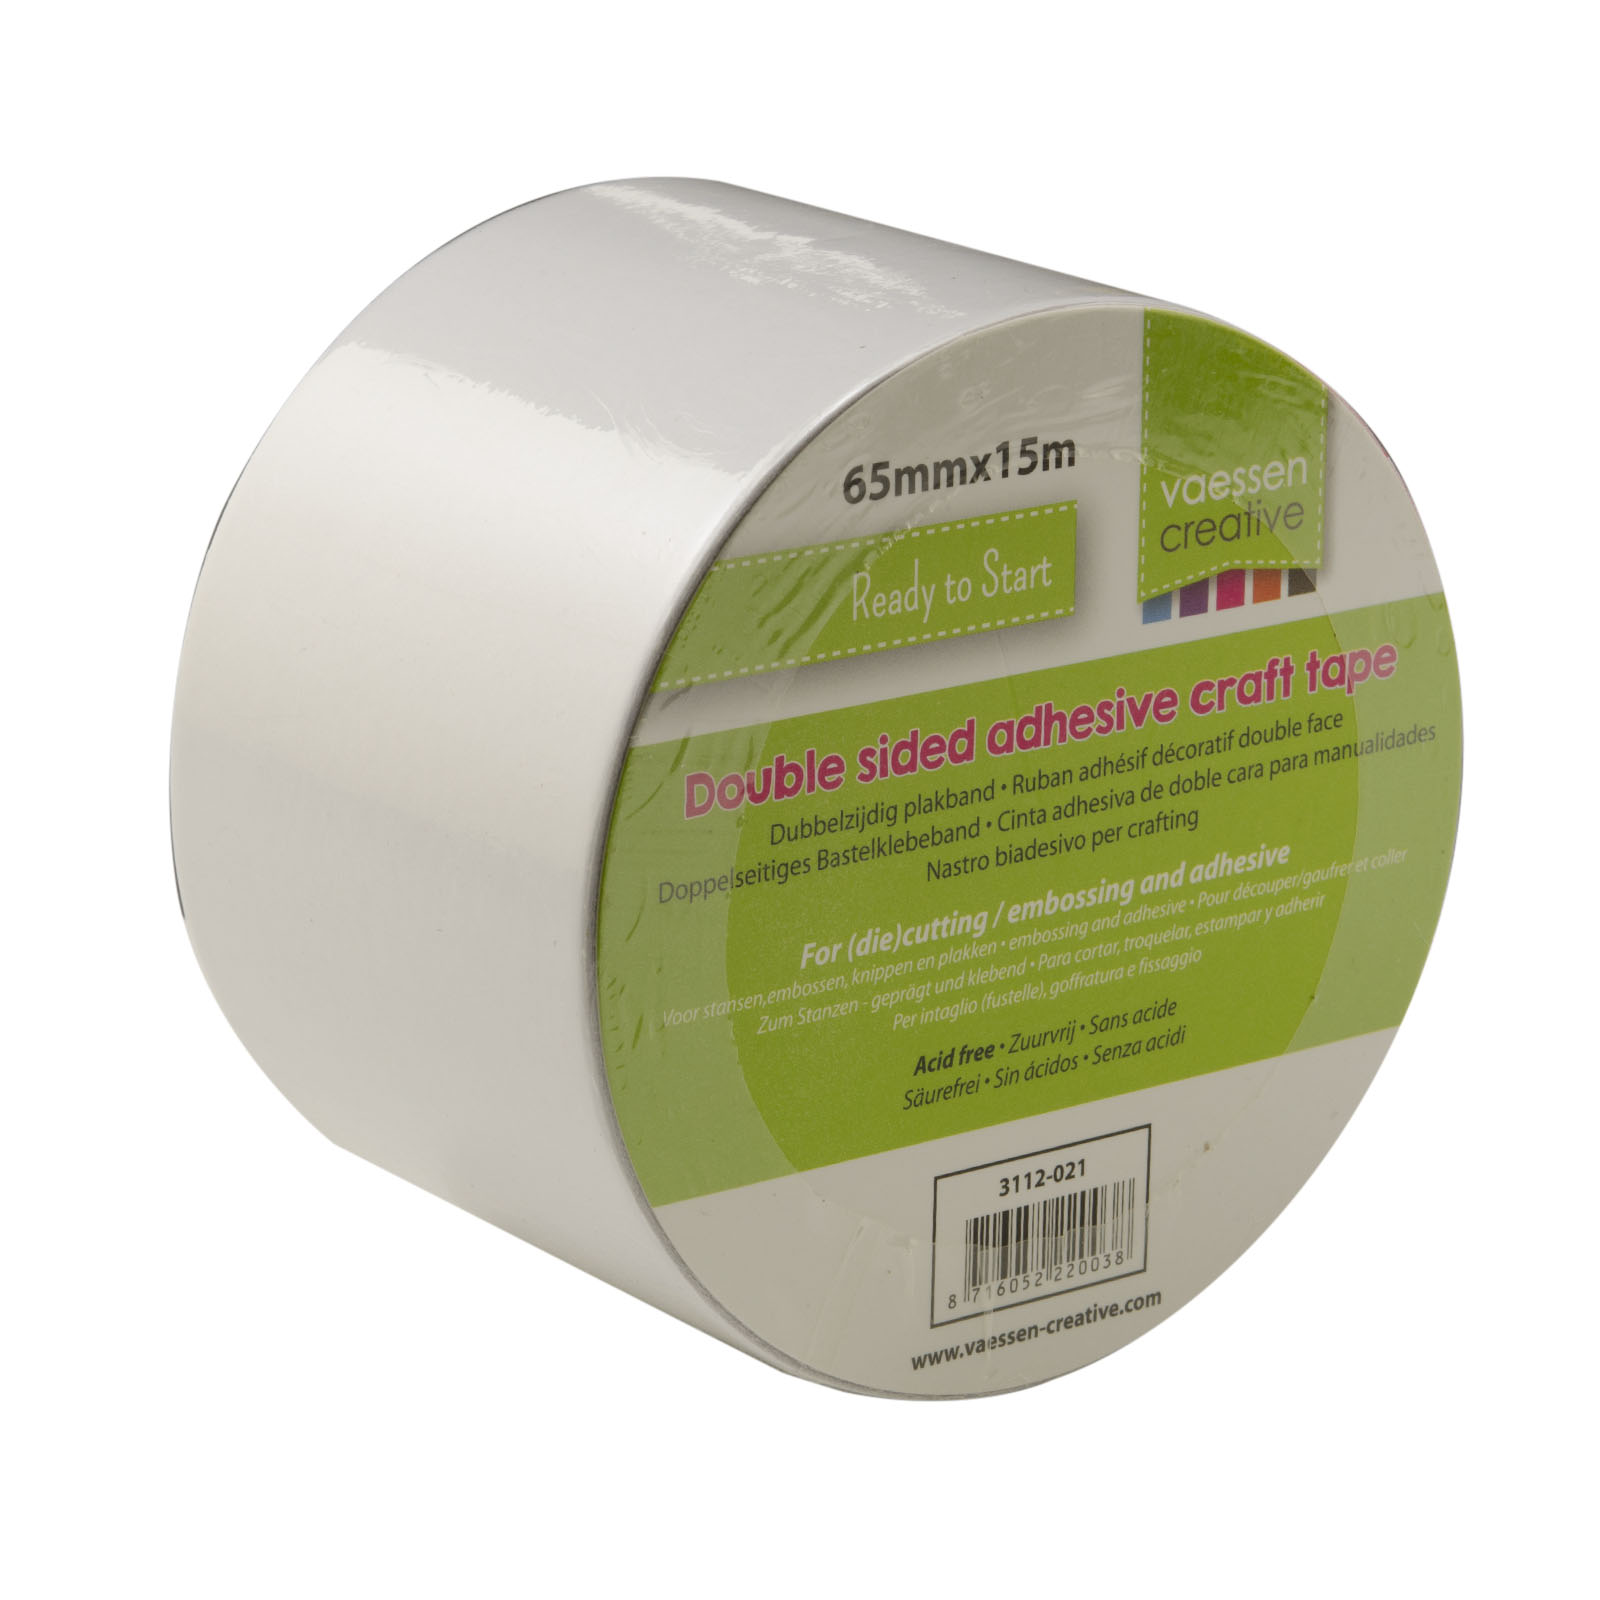 Vaessen Creative • Double-sided adhesive tape 65mmx15m